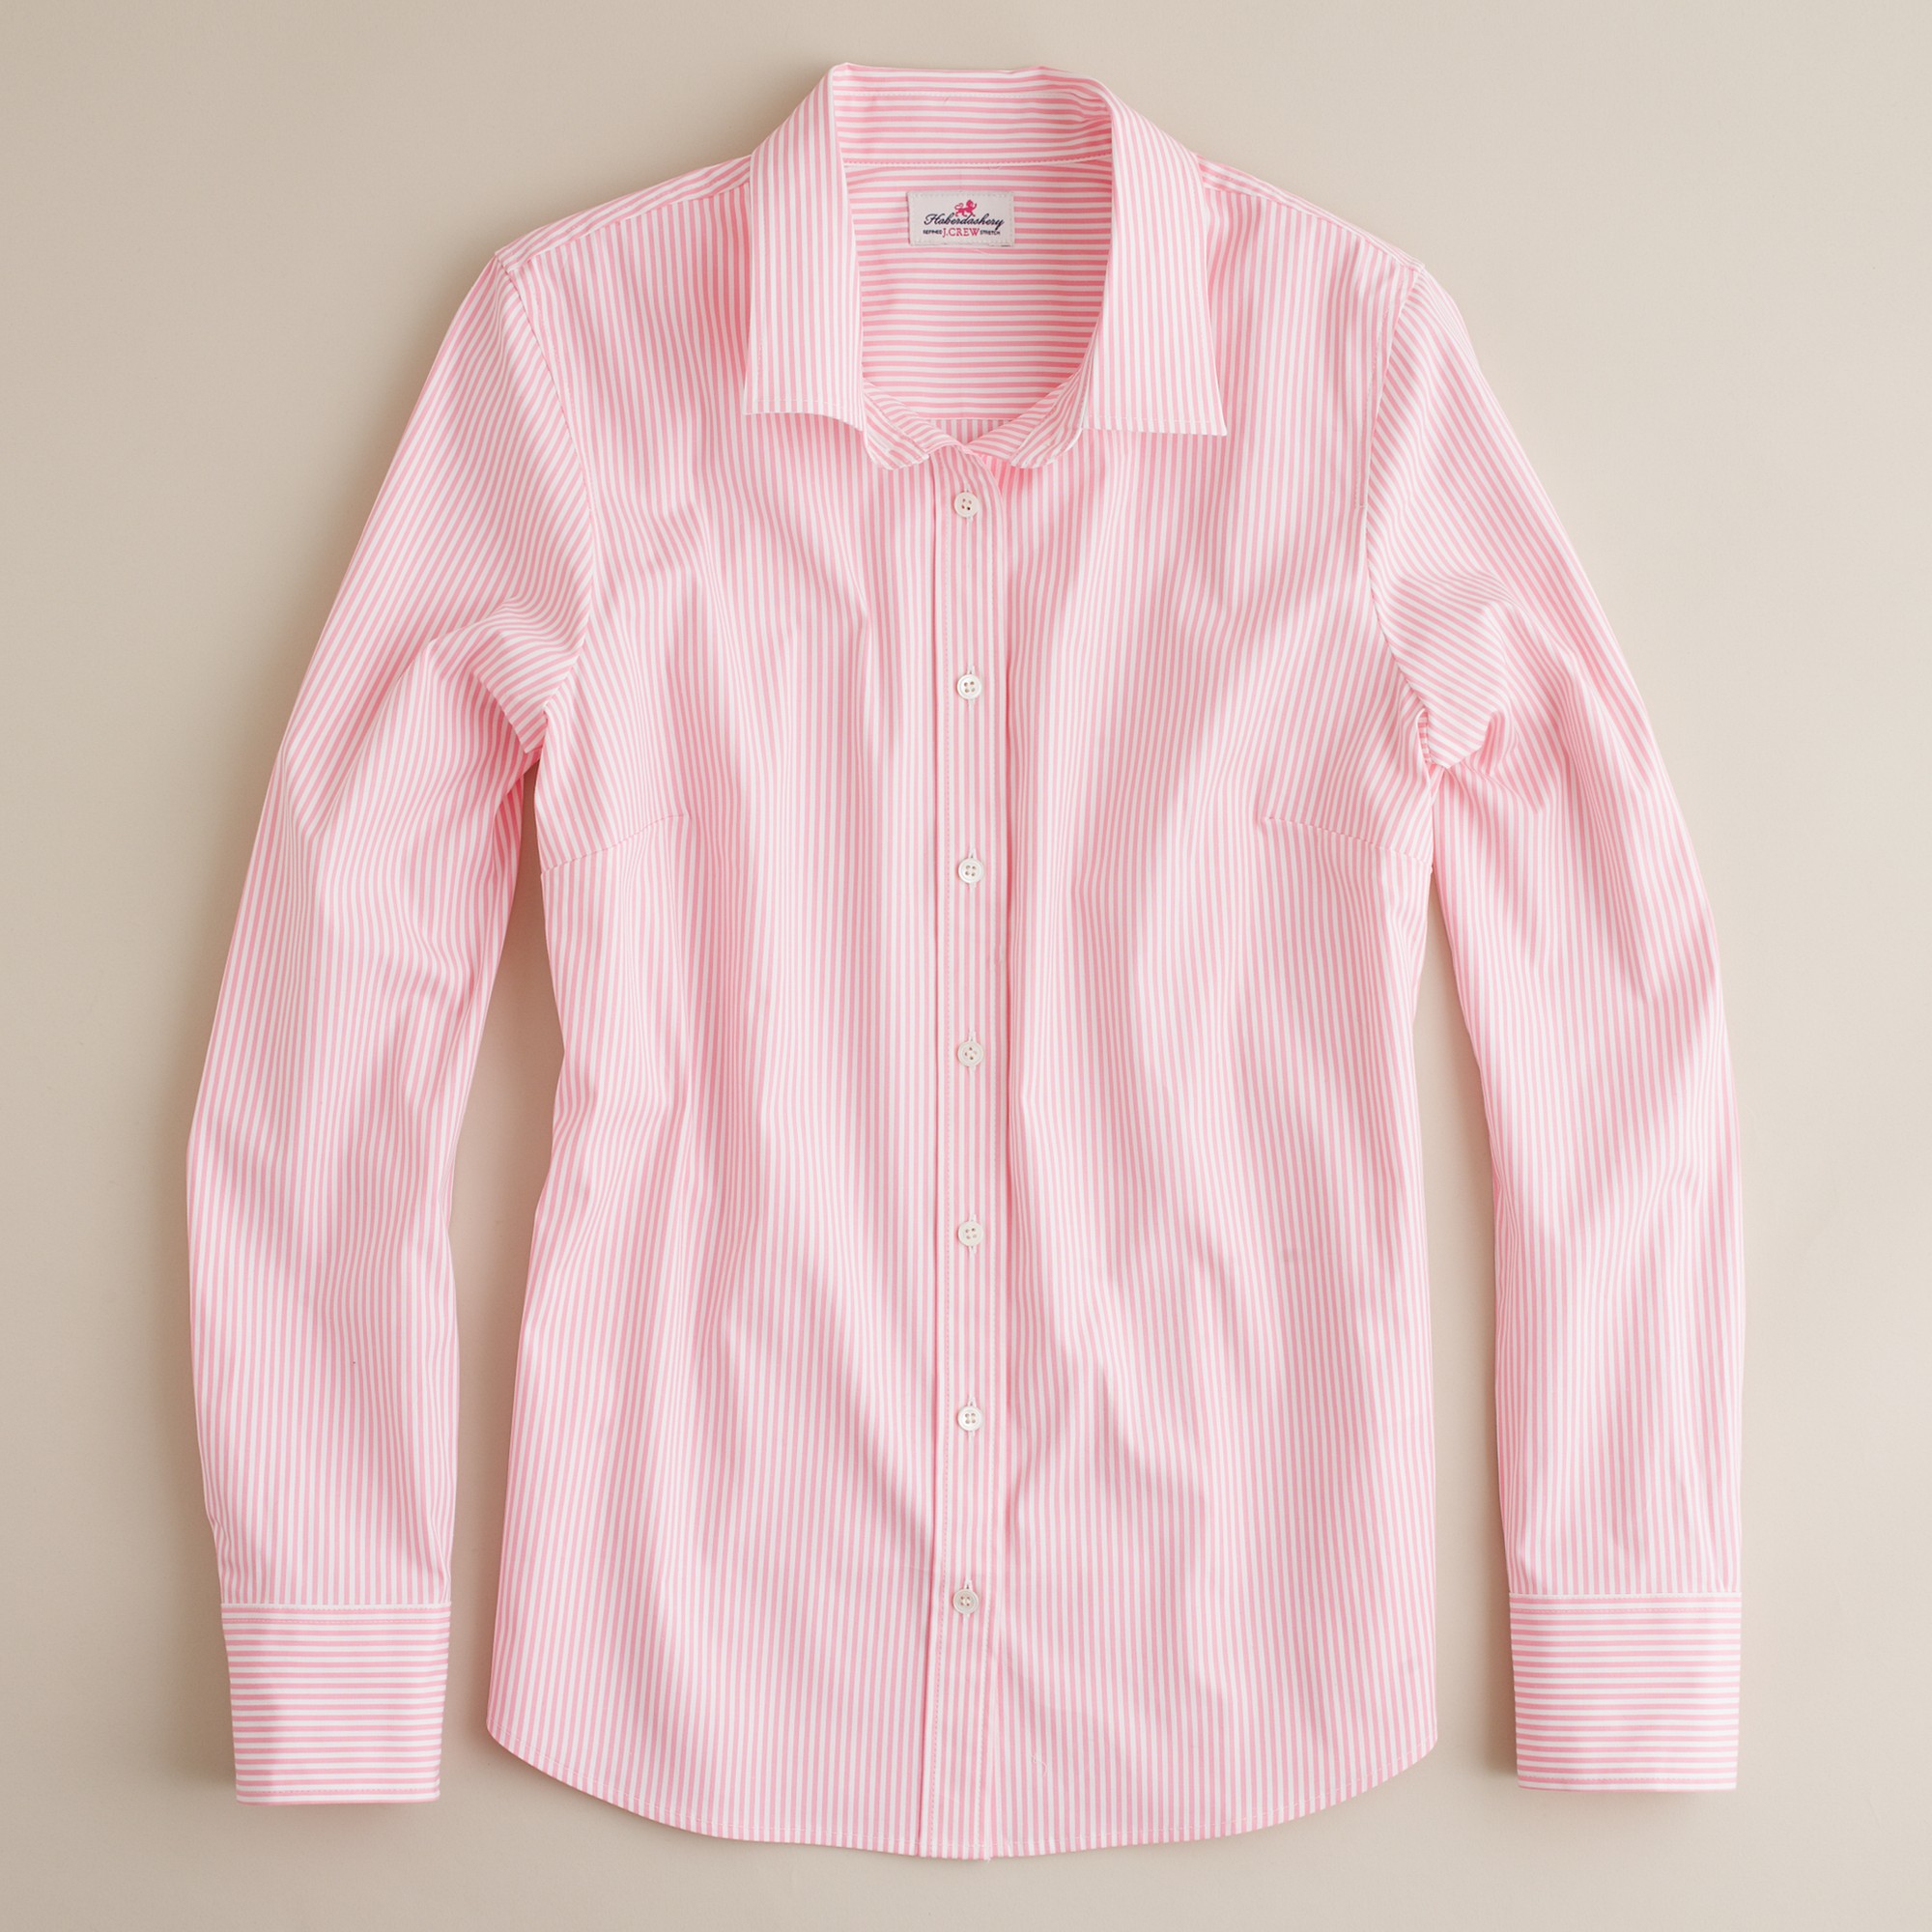 J.crew Stretch Perfect Shirt in Classic Stripe in Pink | Lyst